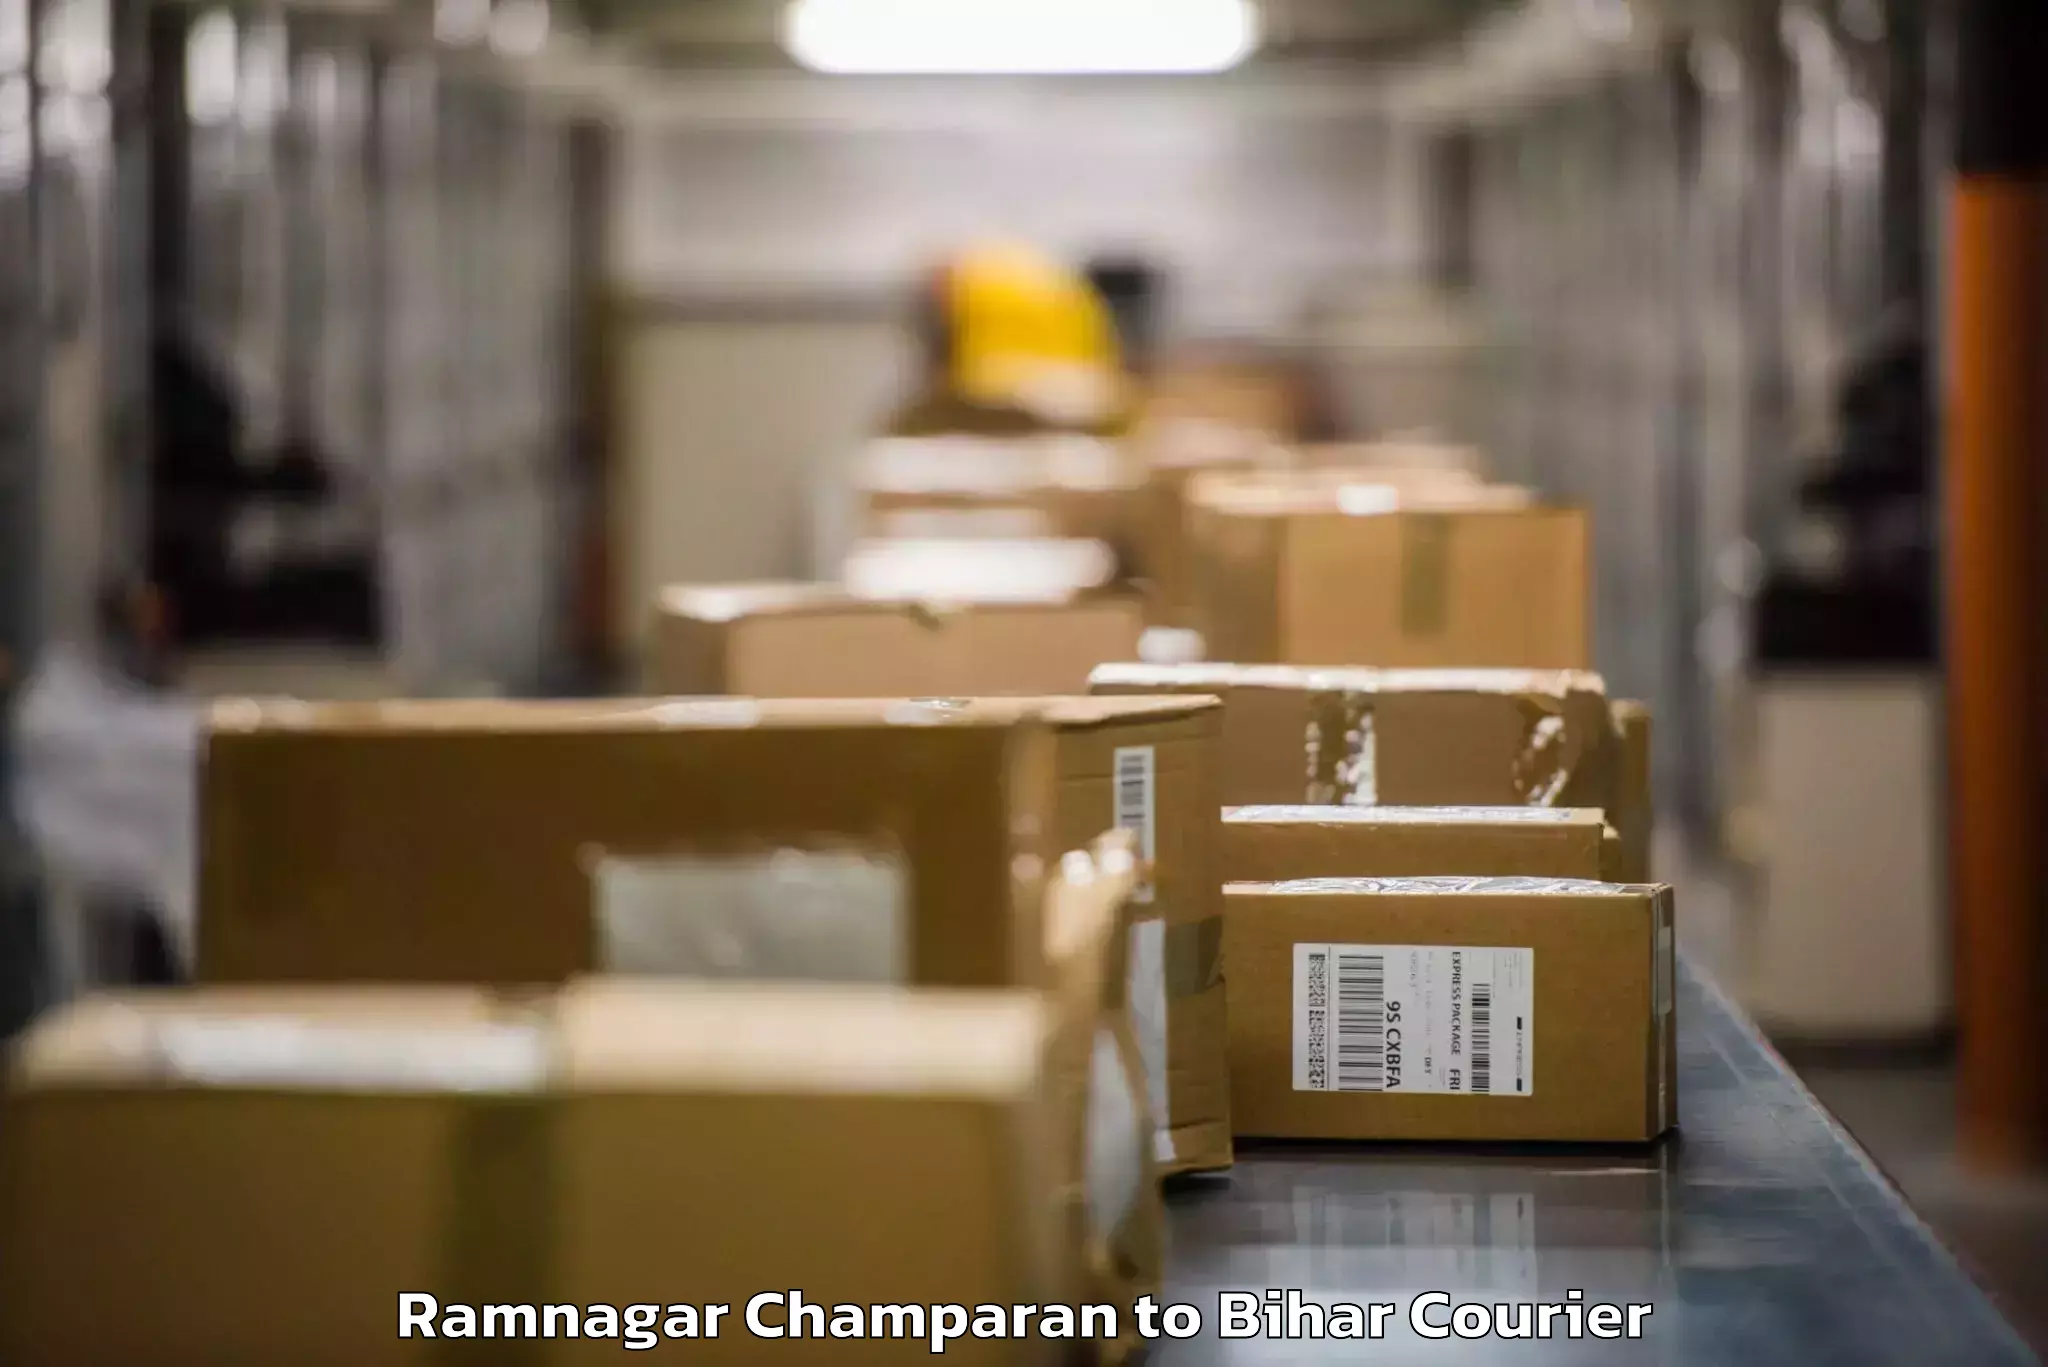 Baggage relocation service Ramnagar Champaran to Buxar